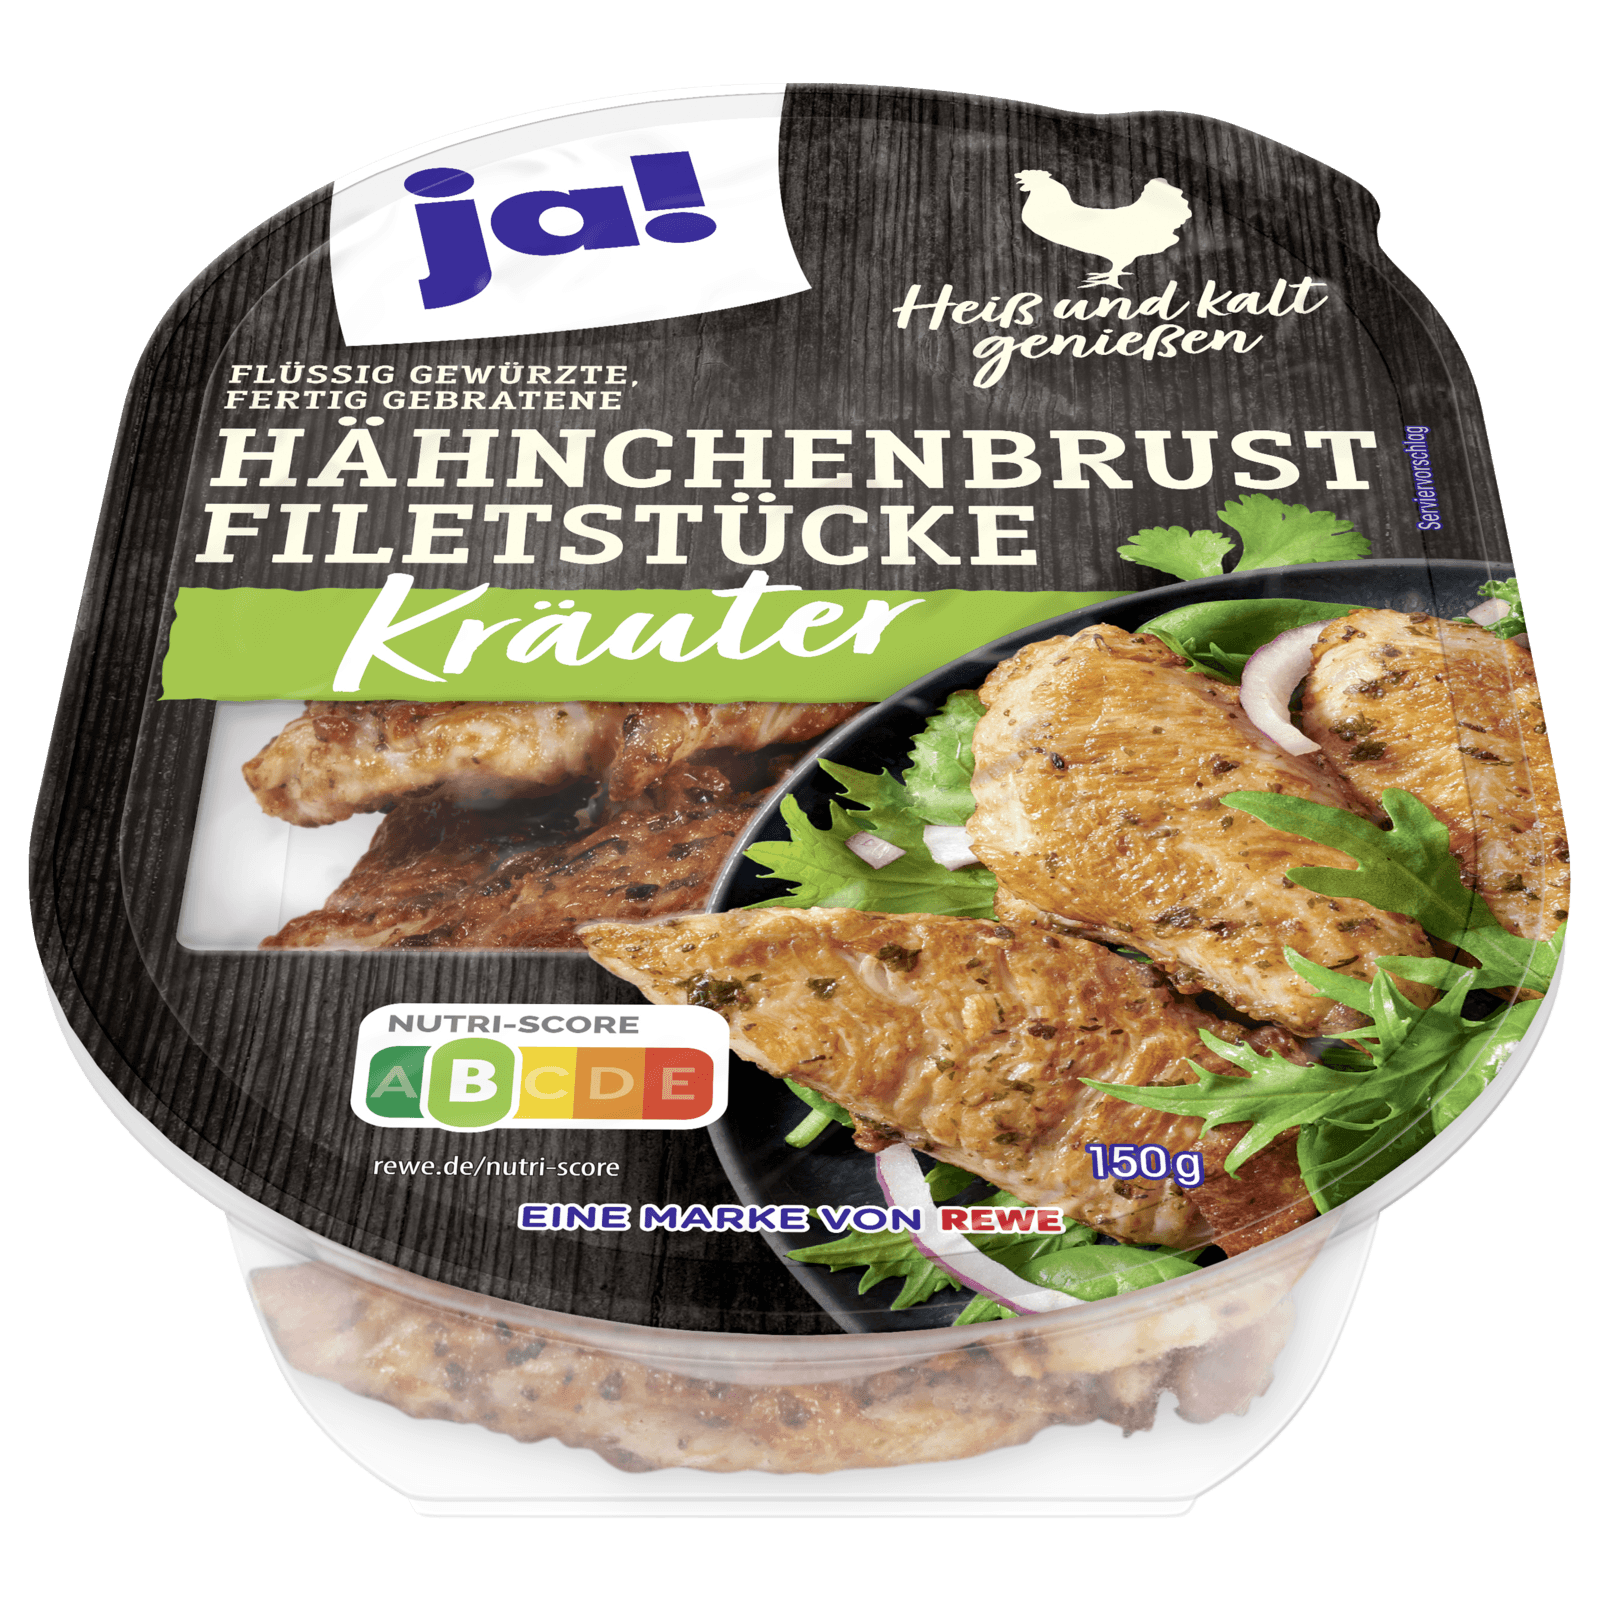 ja! Hähnchenbrust Filetstücke Kräuter 150g online bestellen! REWE bei